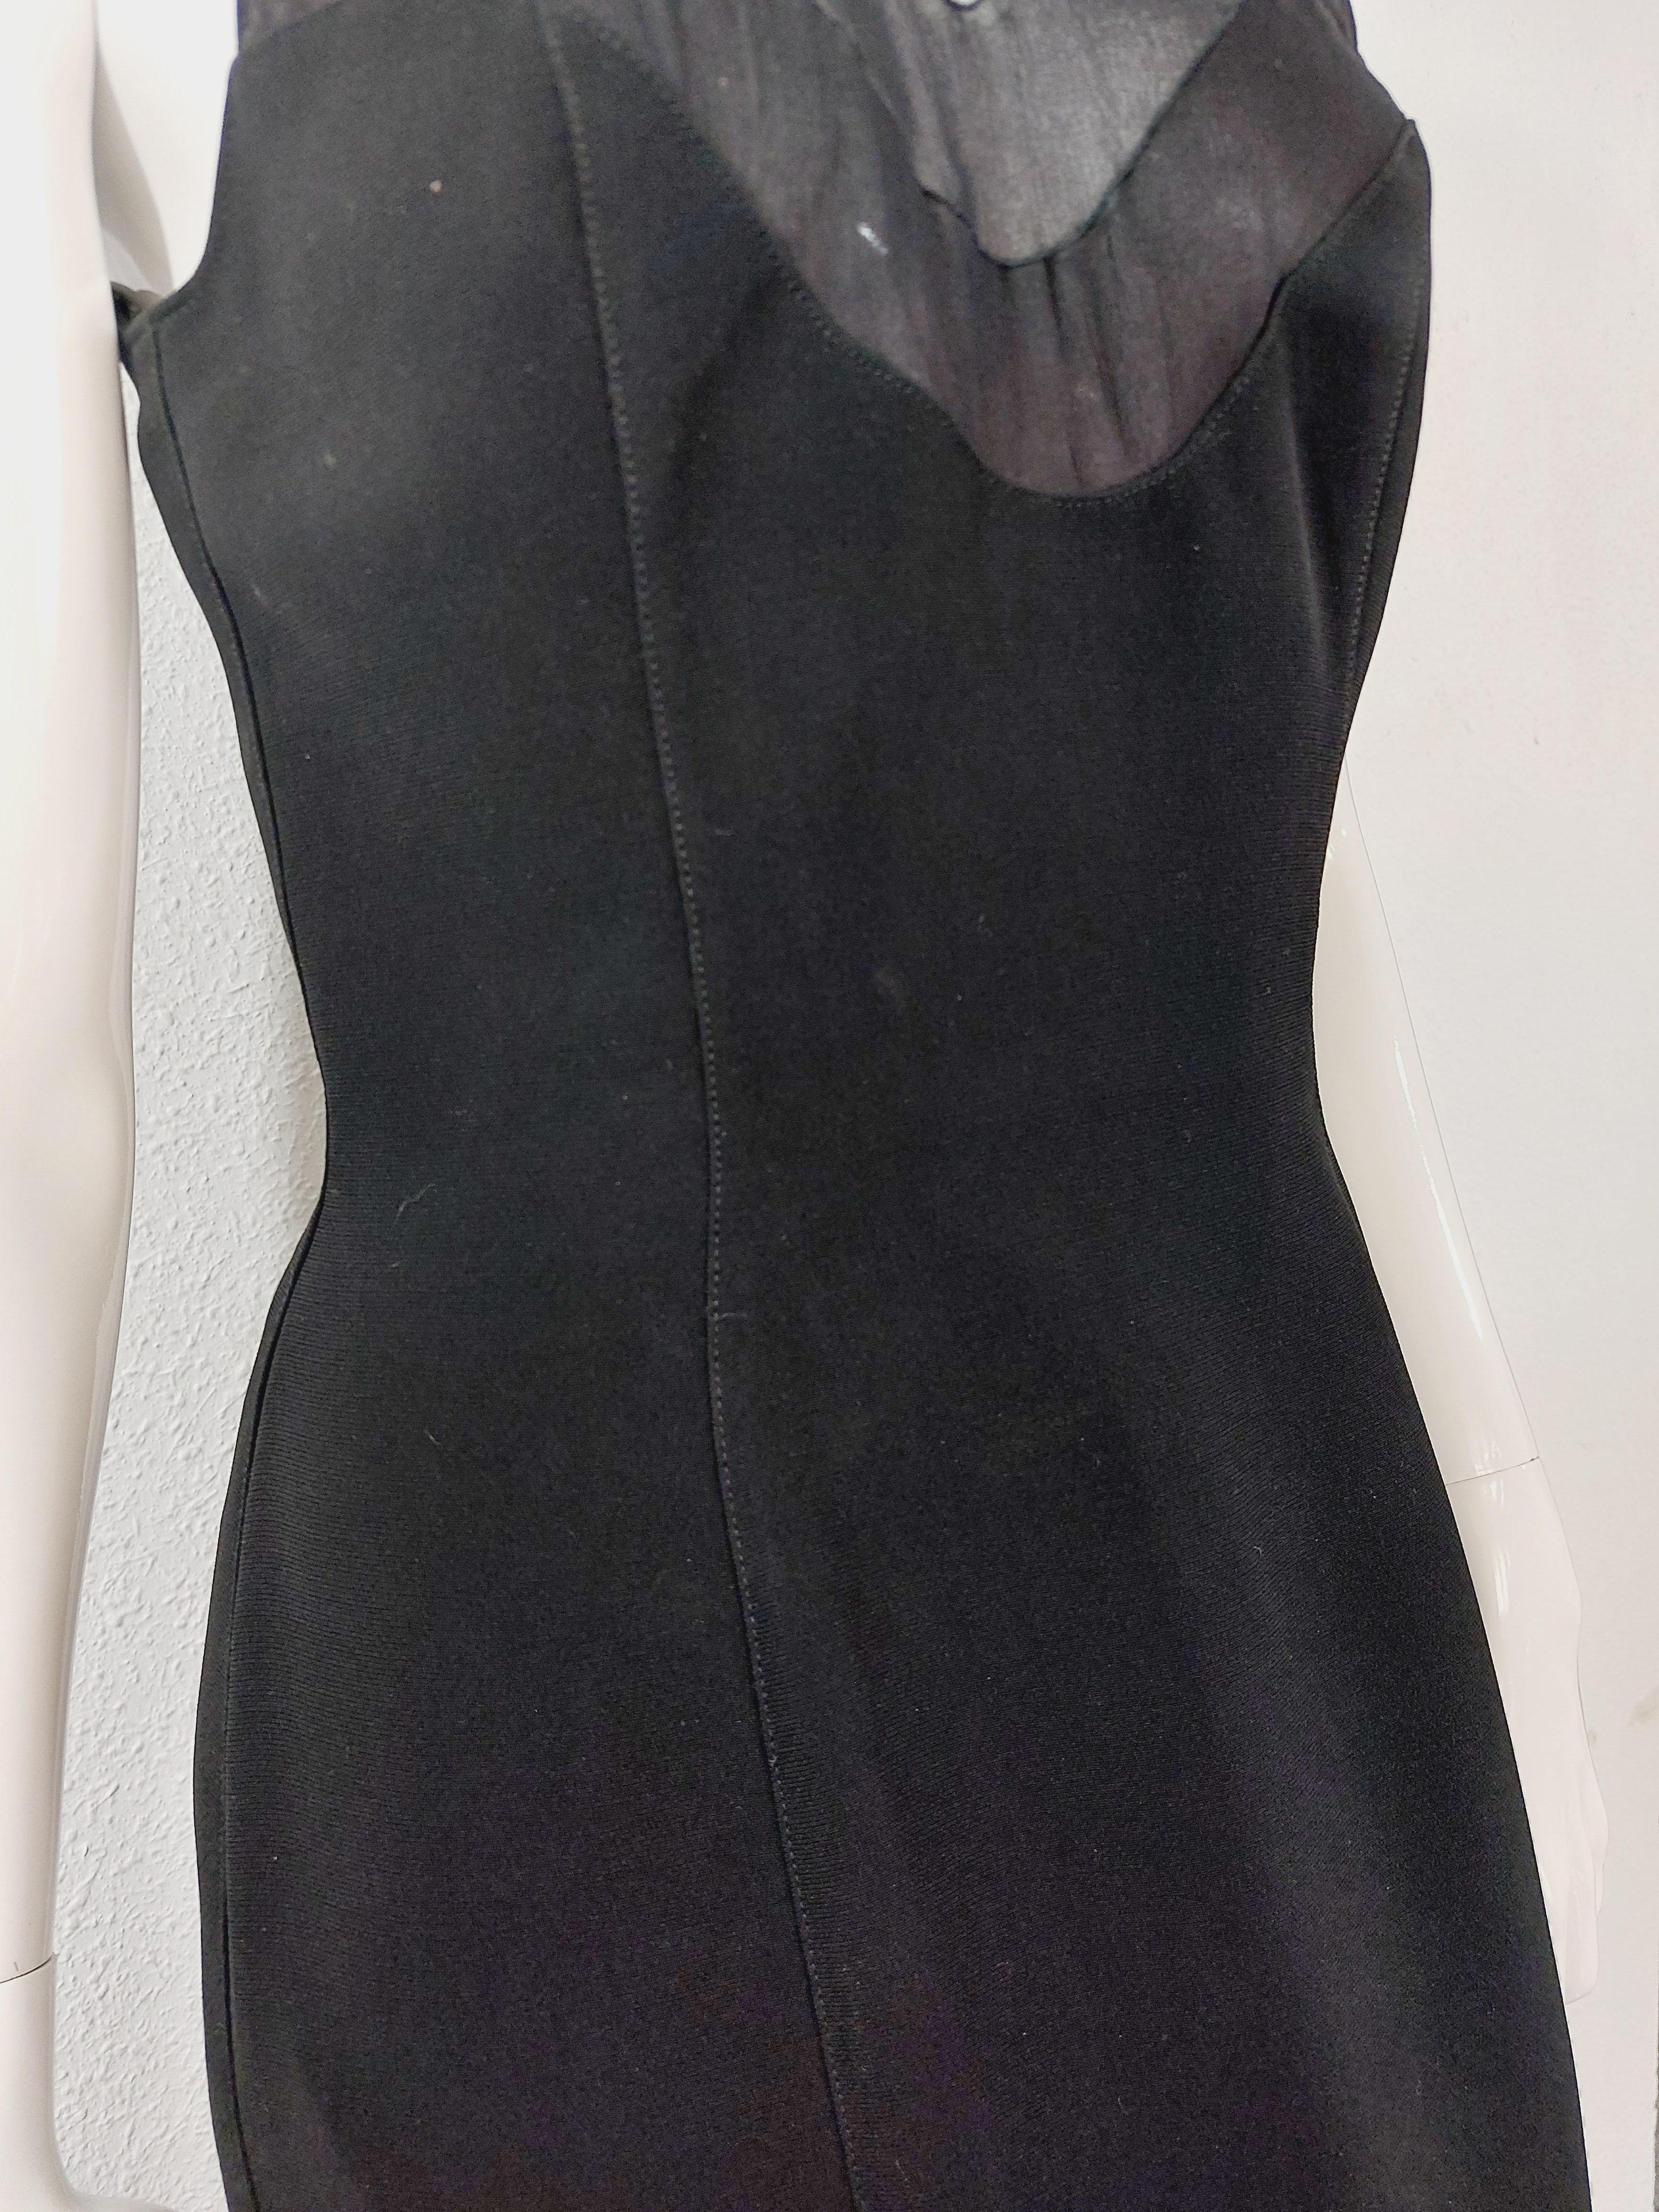 Thierry Mugler Black Elegant Mesh Transparent Formal Cocktail Evening Gown Dress 1